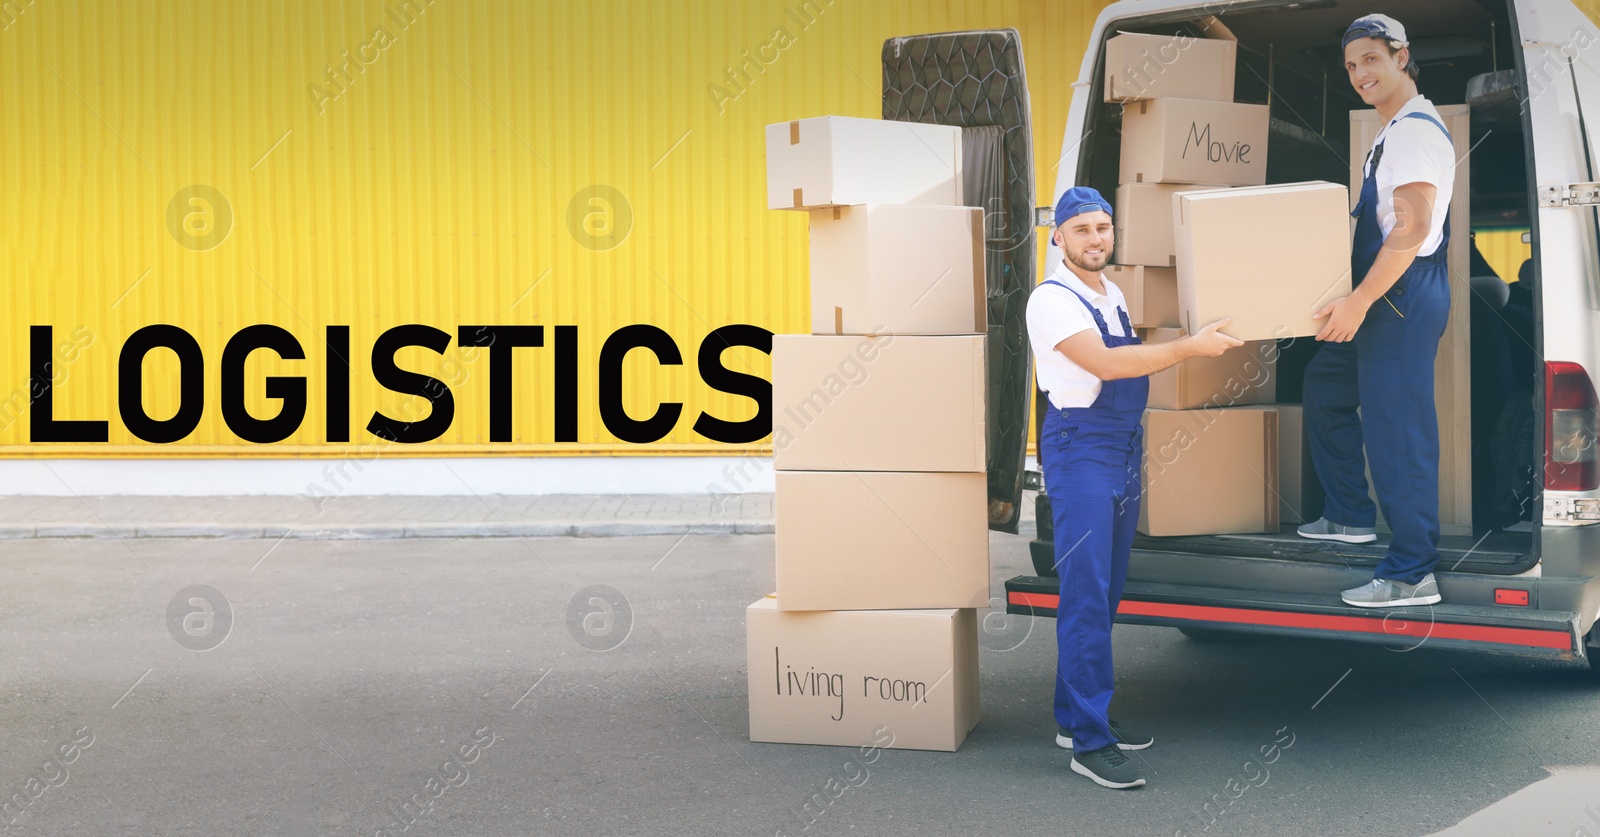 Image of Logistics concept. Men unloading boxes from van 